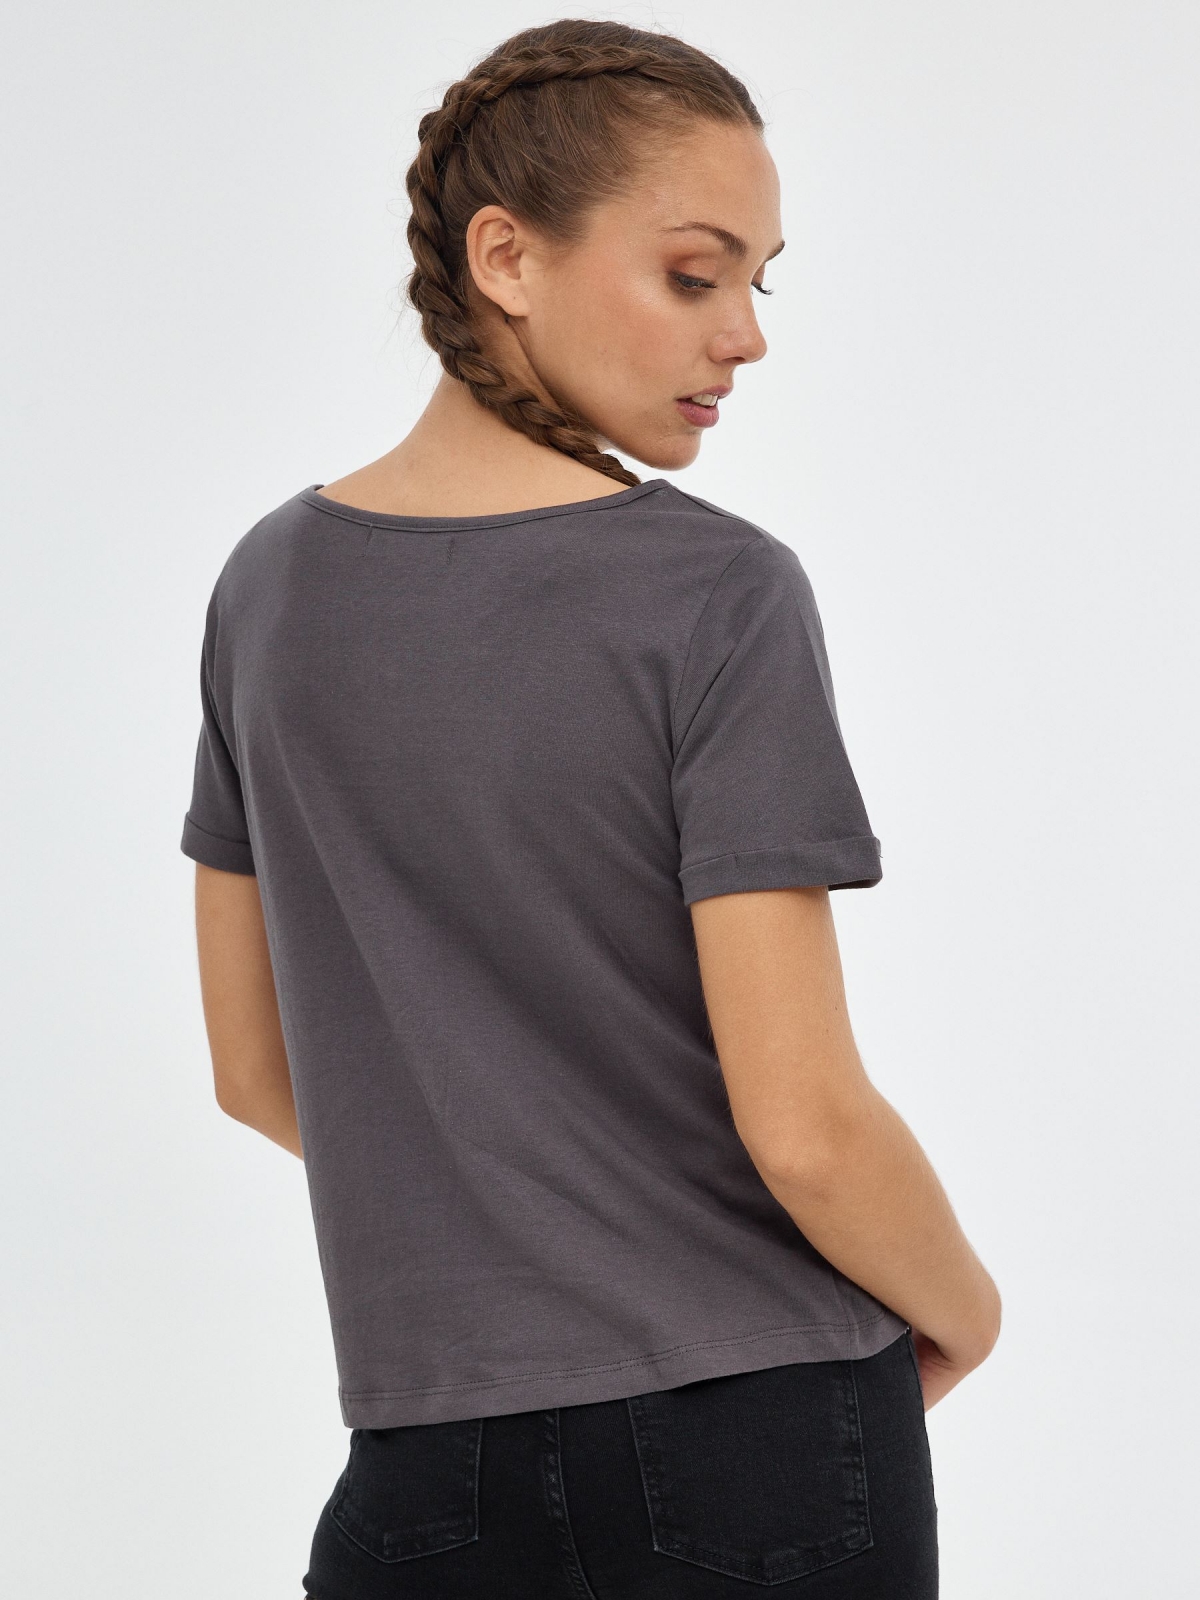 T-shirt Australia cinza escuro vista meia traseira